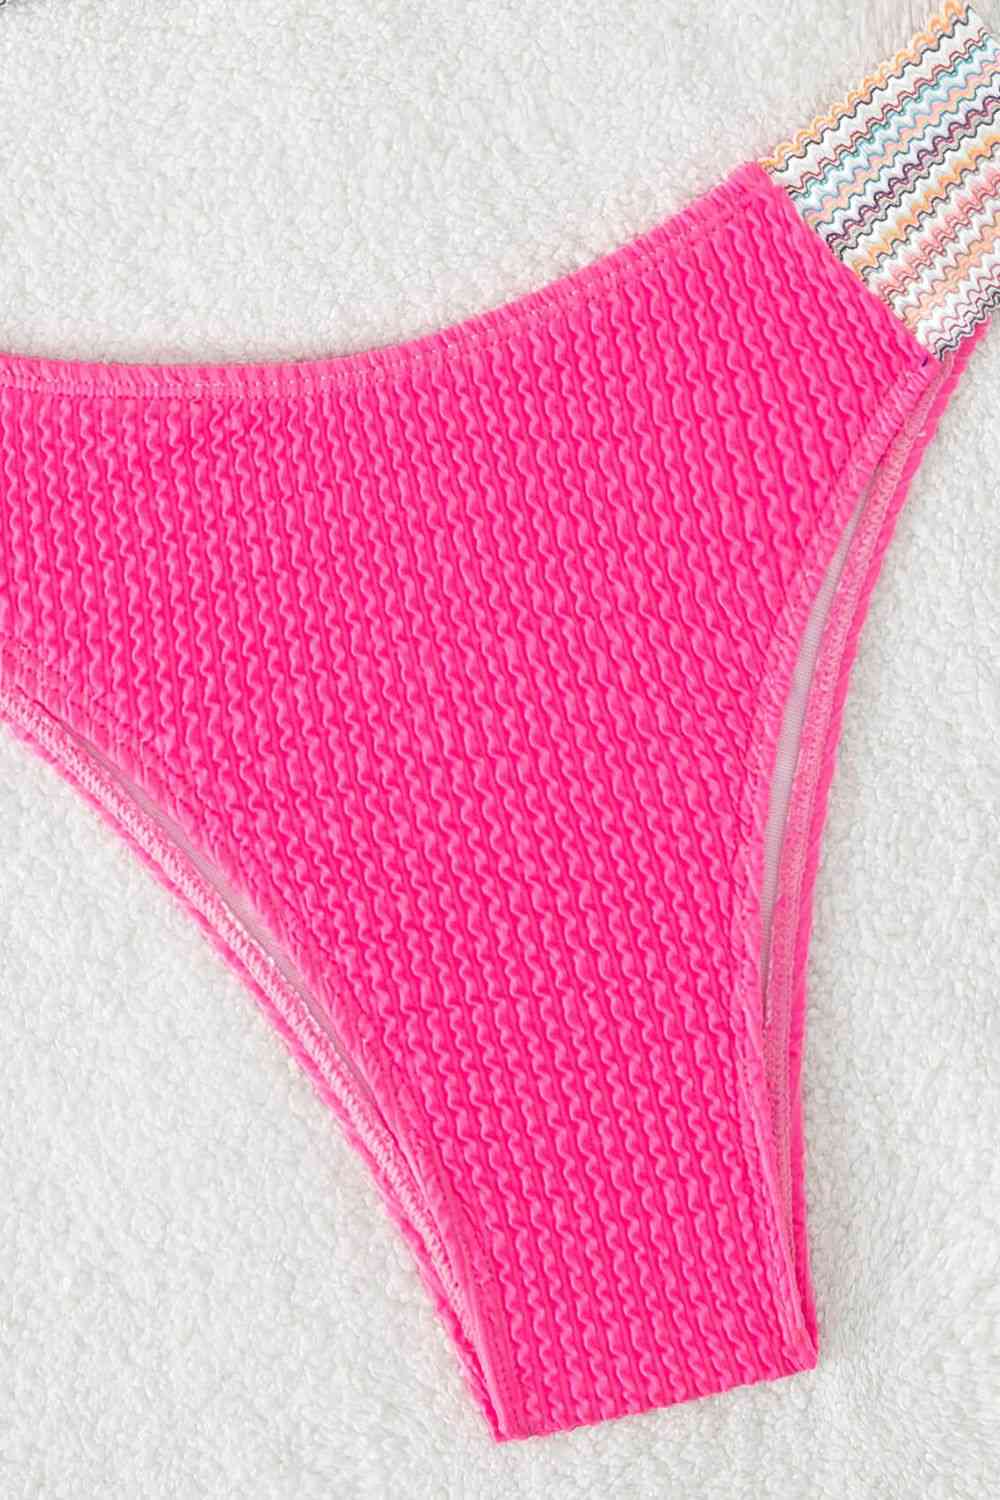 a close up of a pink bikini bottom